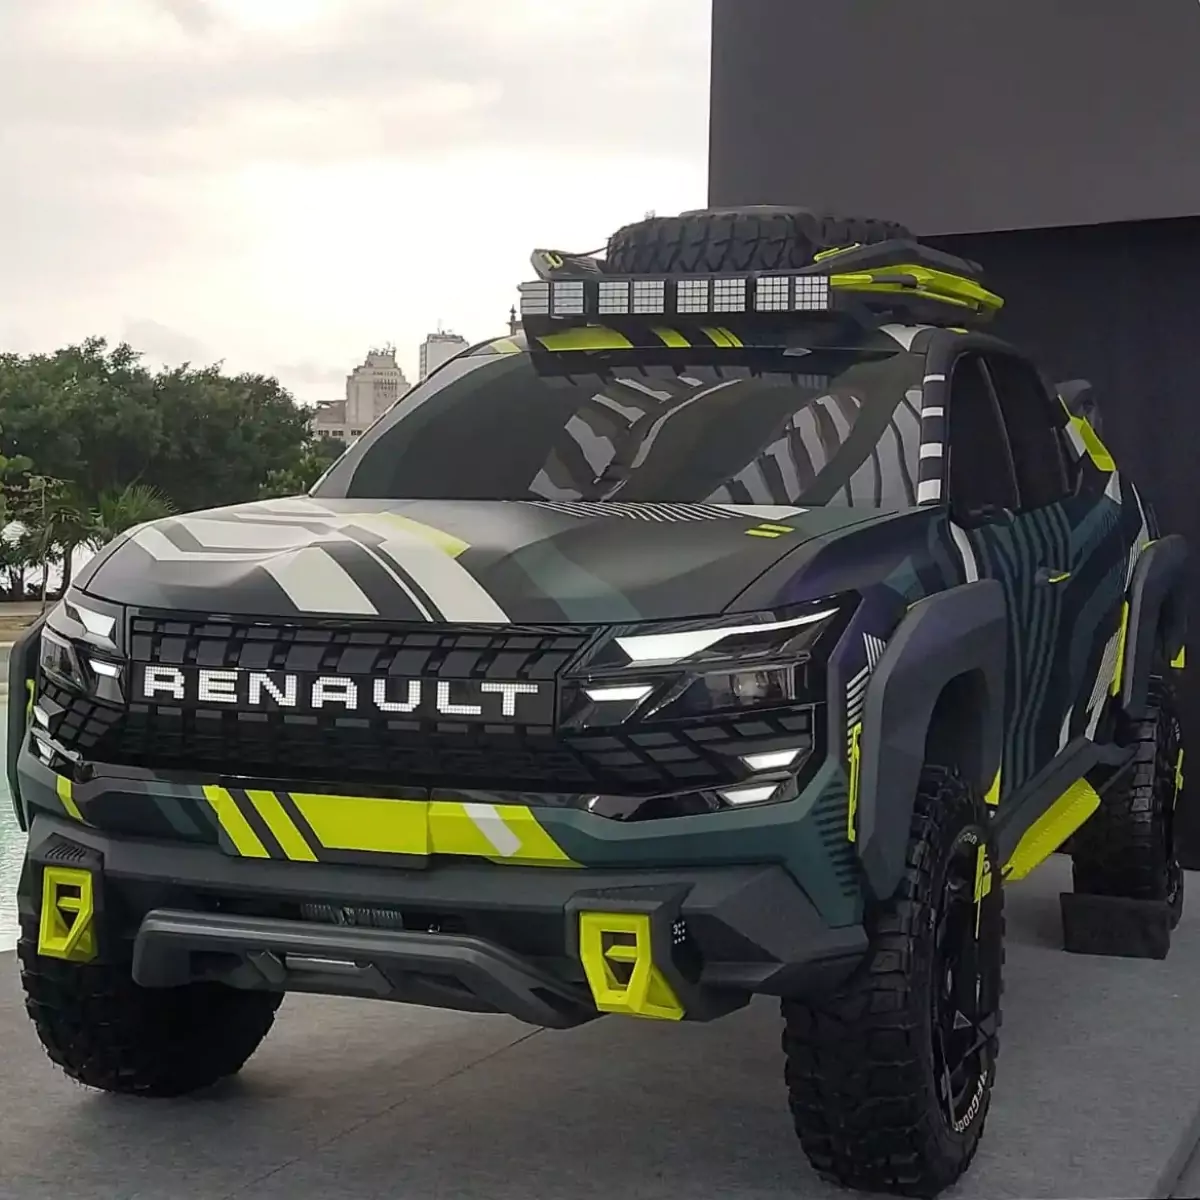 Nova pickup da Renault (Niagara Concept) / Foto: Renault